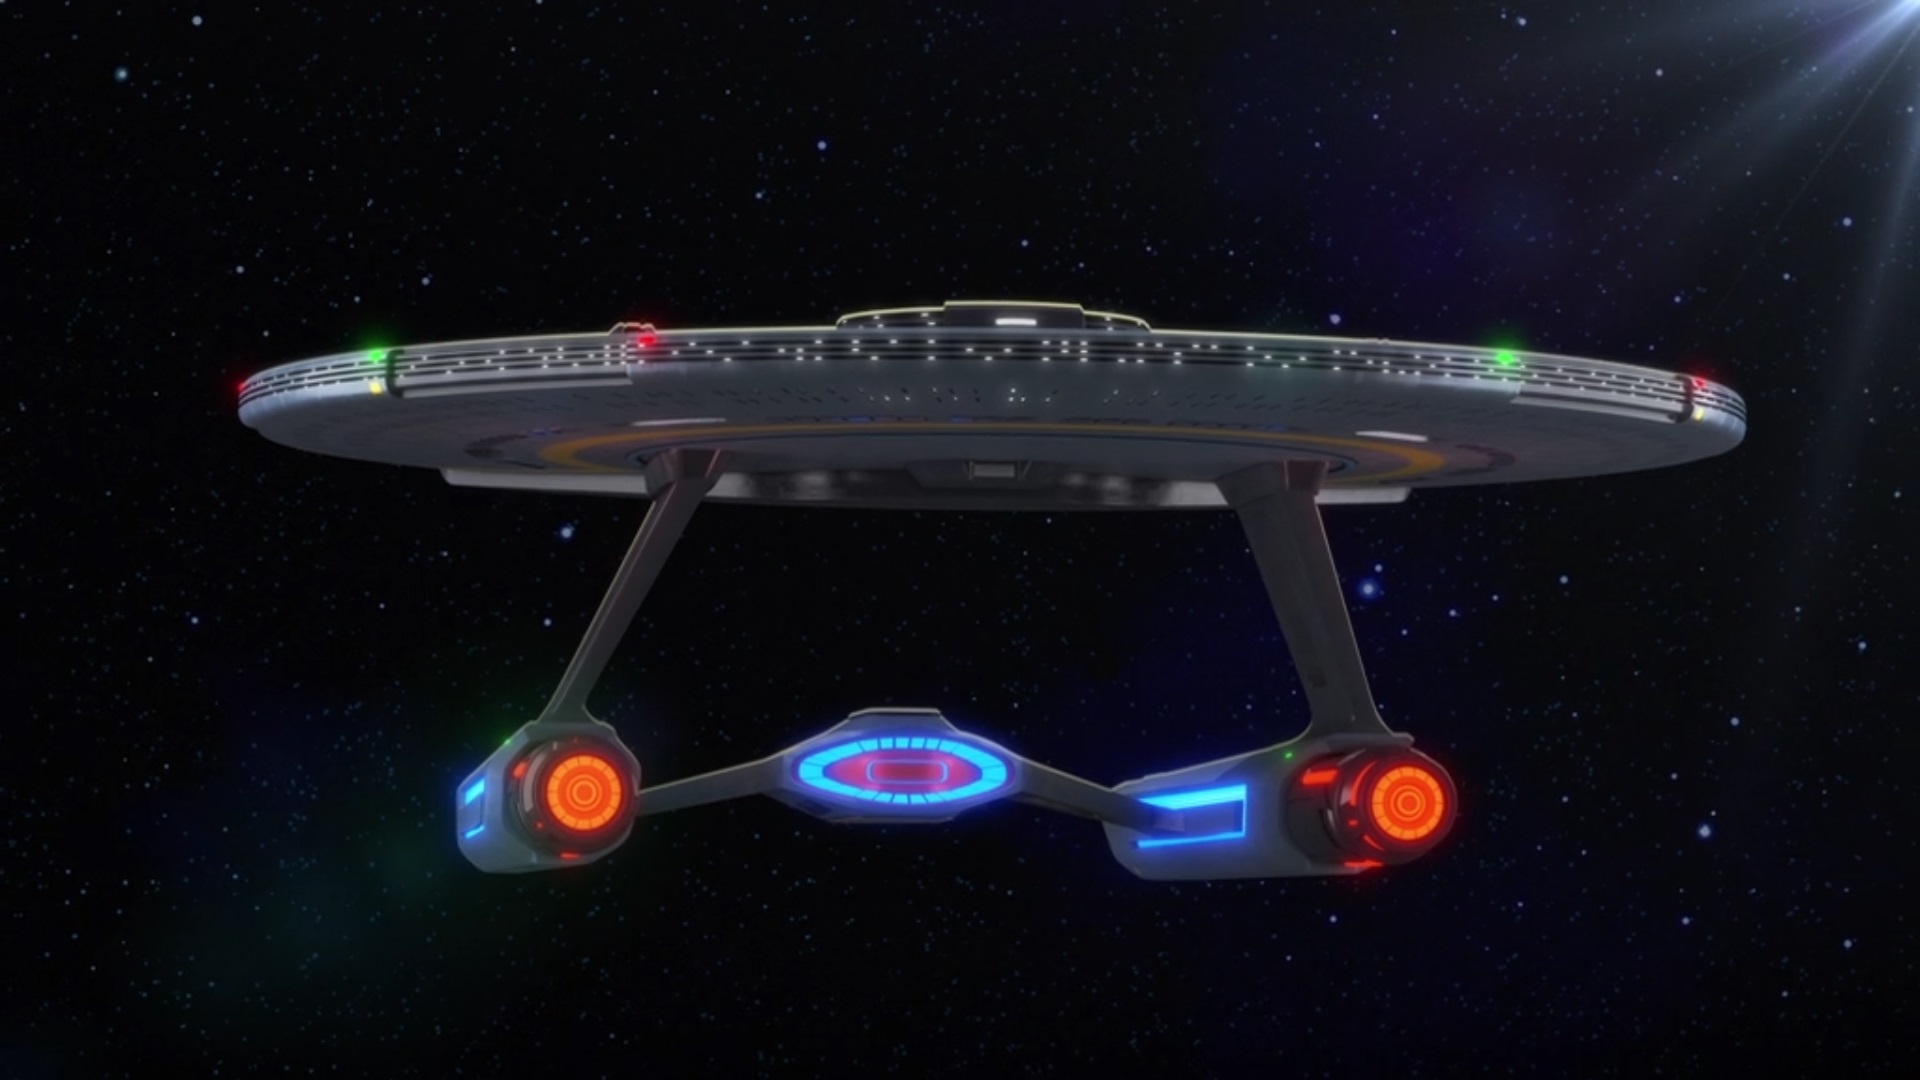 Star Trek: Lower Decks (season 3) - Wikipedia